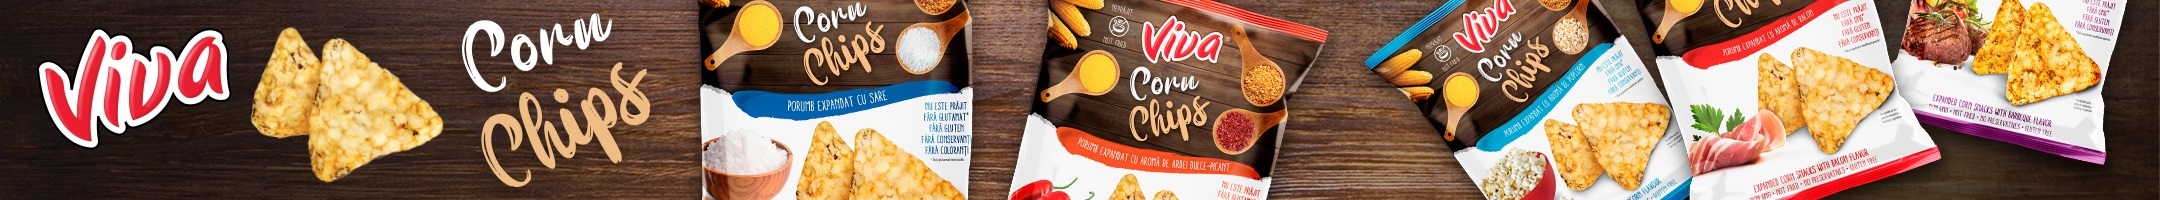 Viva corn chips top